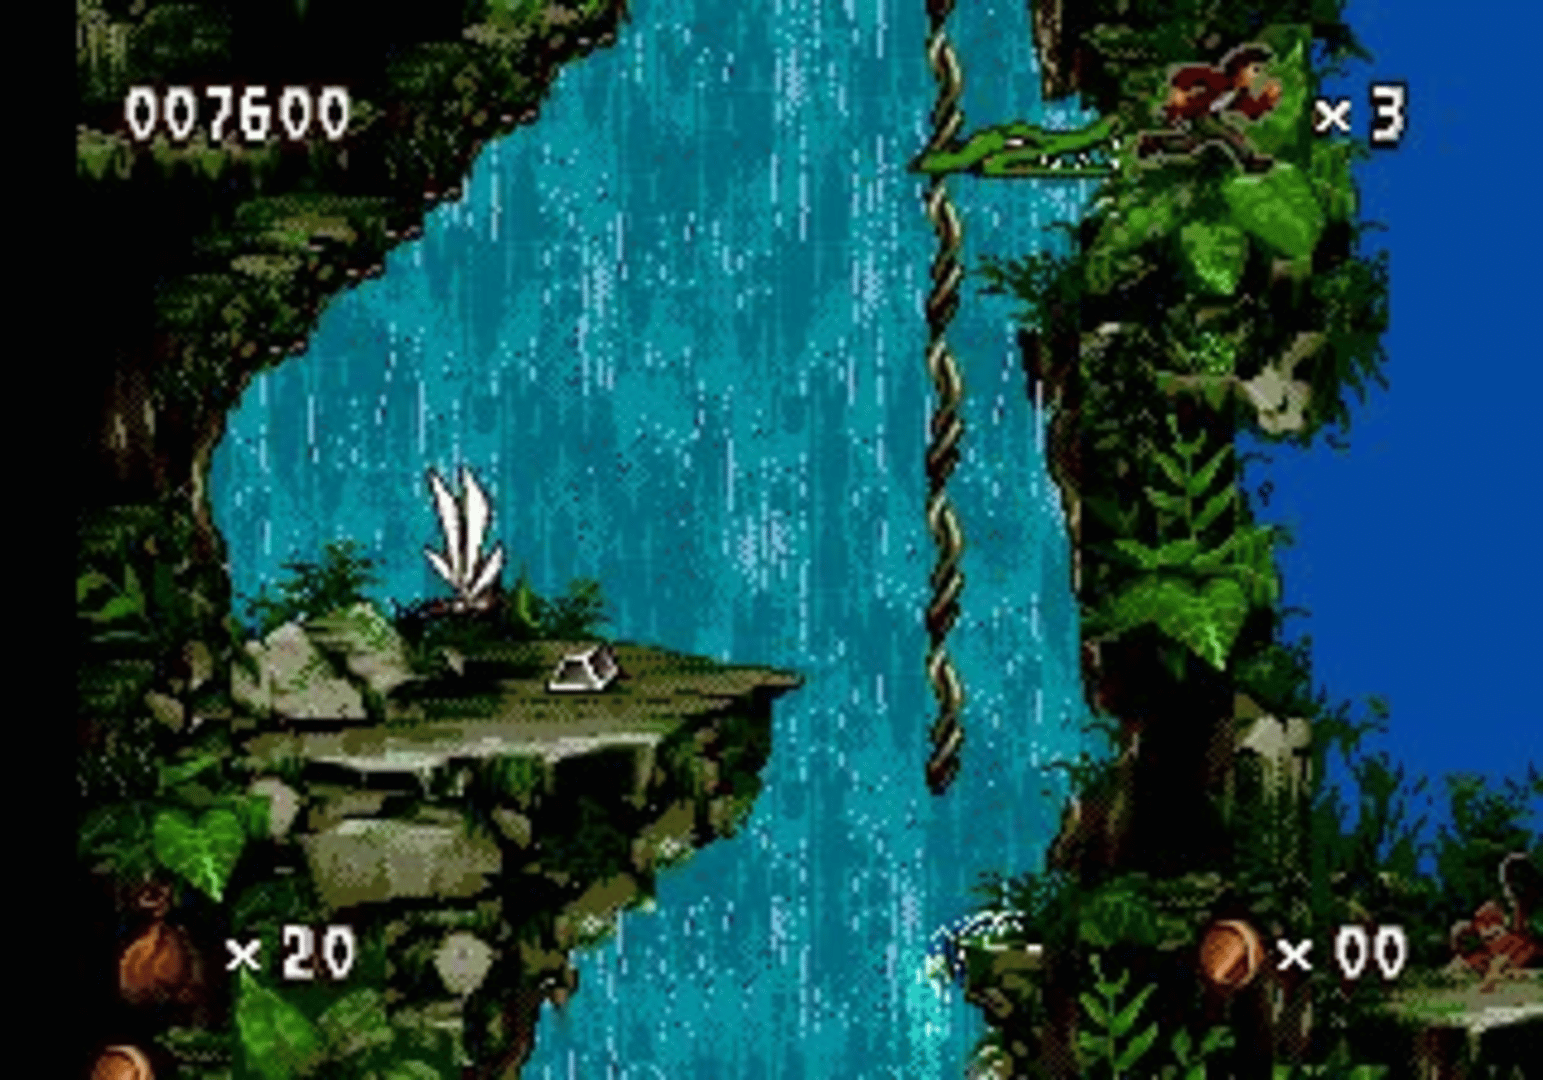 Pitfall: The Mayan Adventure screenshot